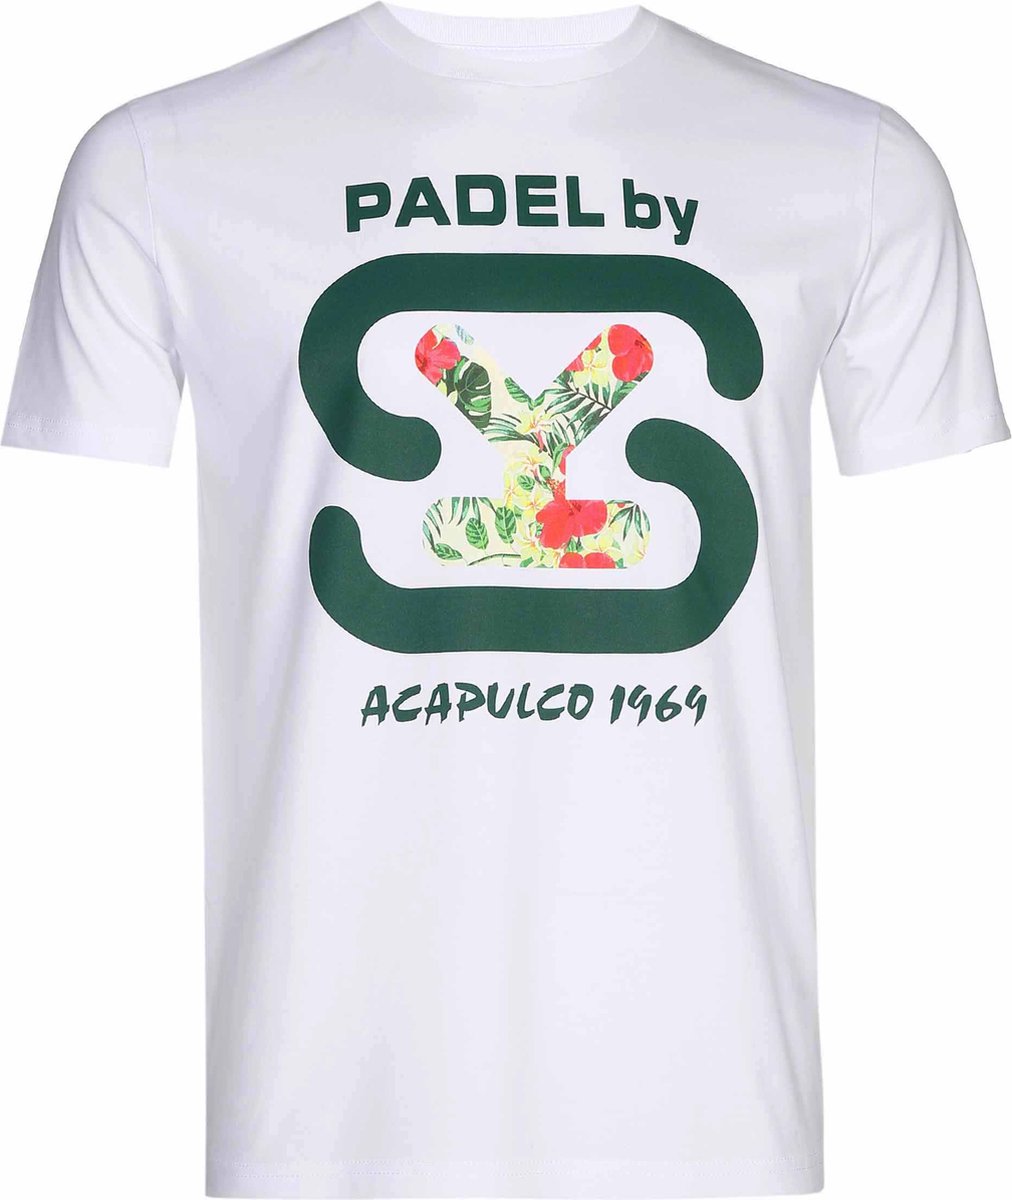 PADELbySY - ACAPULCO 1969 - T-SHIRT MEN'S - WHITE - SIZE XXL